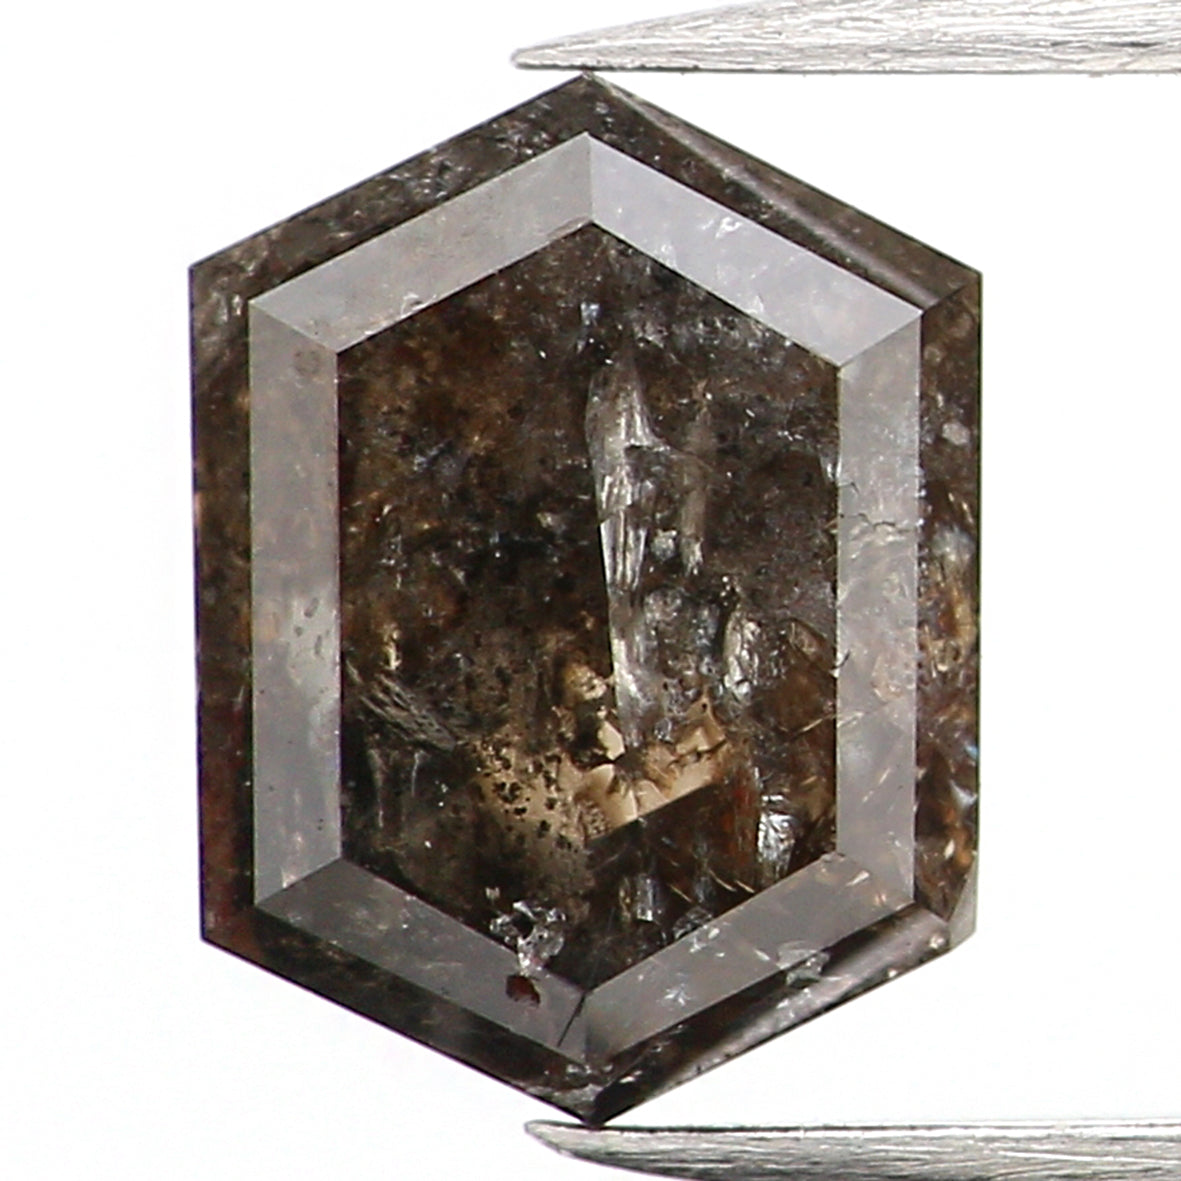 0.65 Ct Natural Loose Hexagon Shape Diamond Black Brown Color Hexagon Diamond 6.30 MM Natural Loose Diamond Hexagon Shape Diamond QK2330